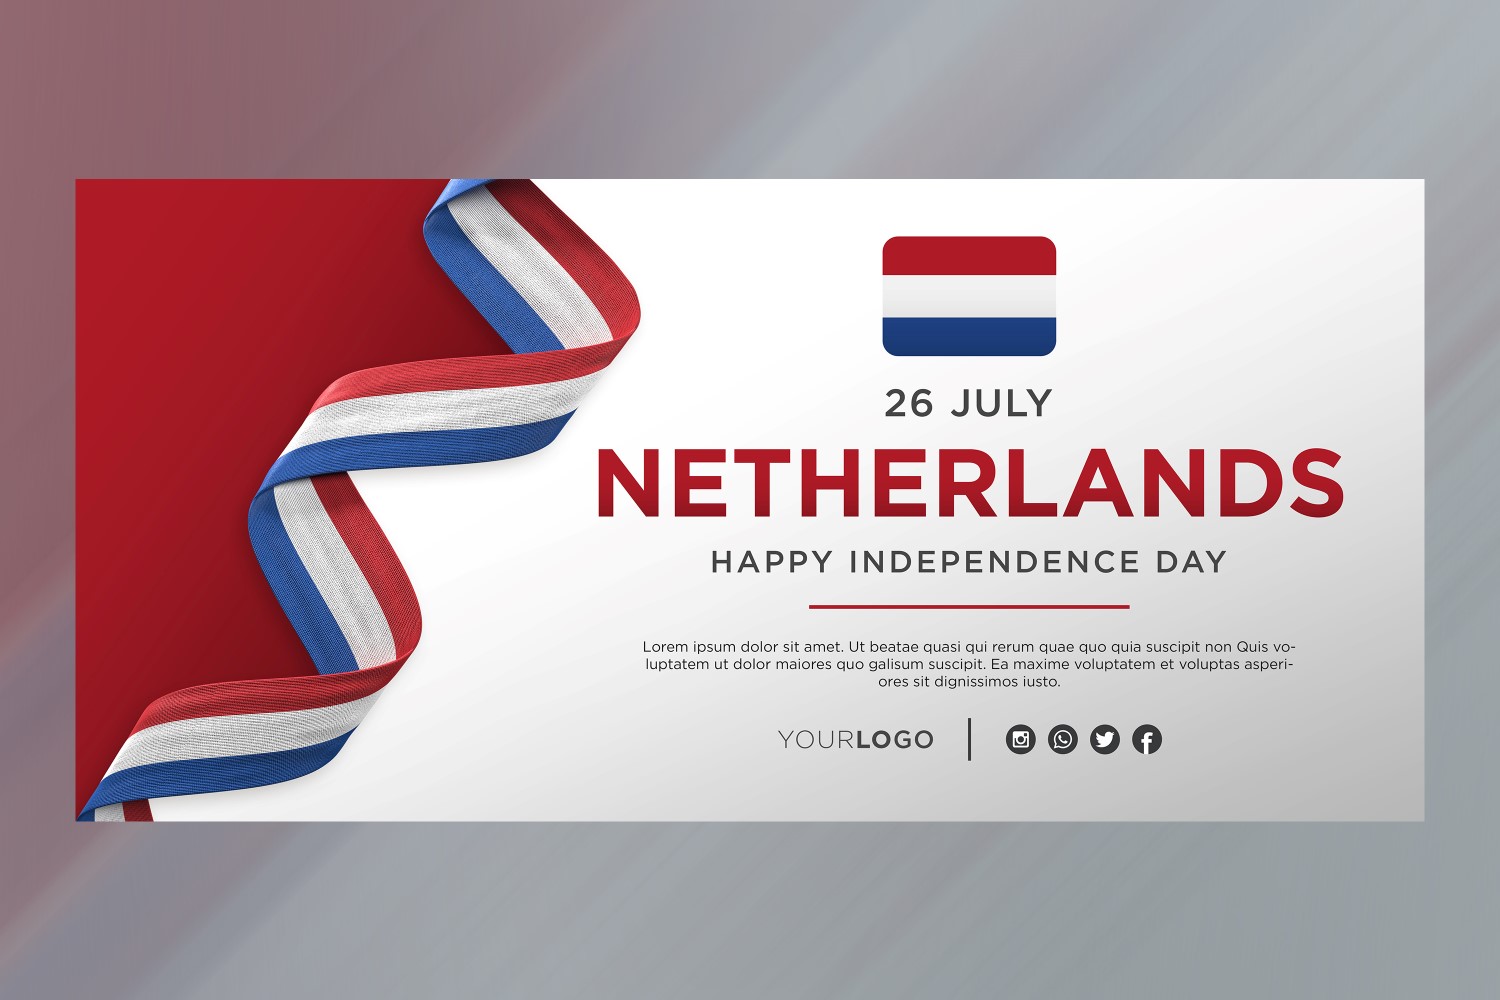 Netherlands National Independence Day Celebration Banner, National Anniversary